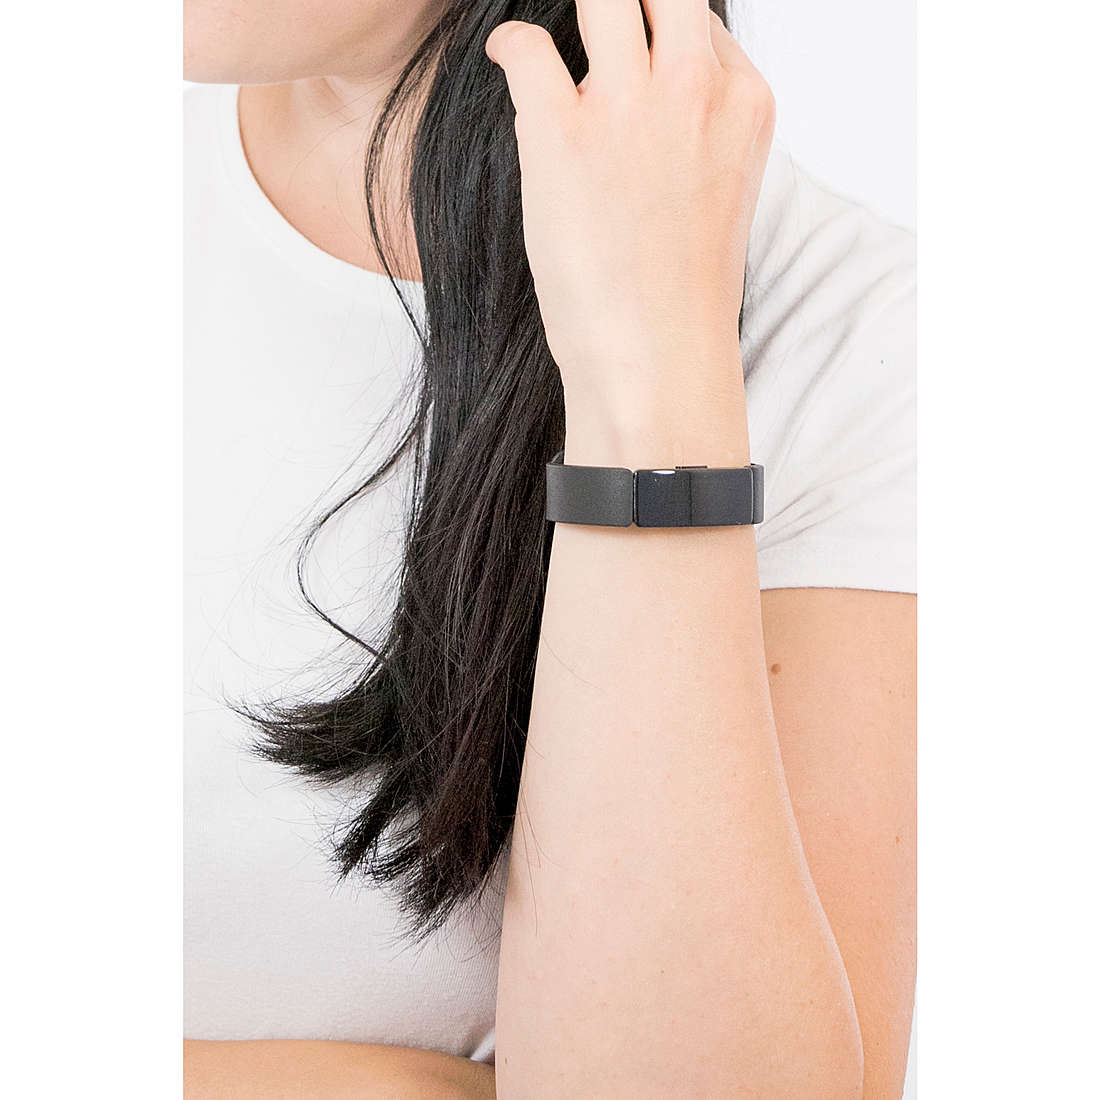 Fitbit digitals Inspire woman FB412BKBK wearing